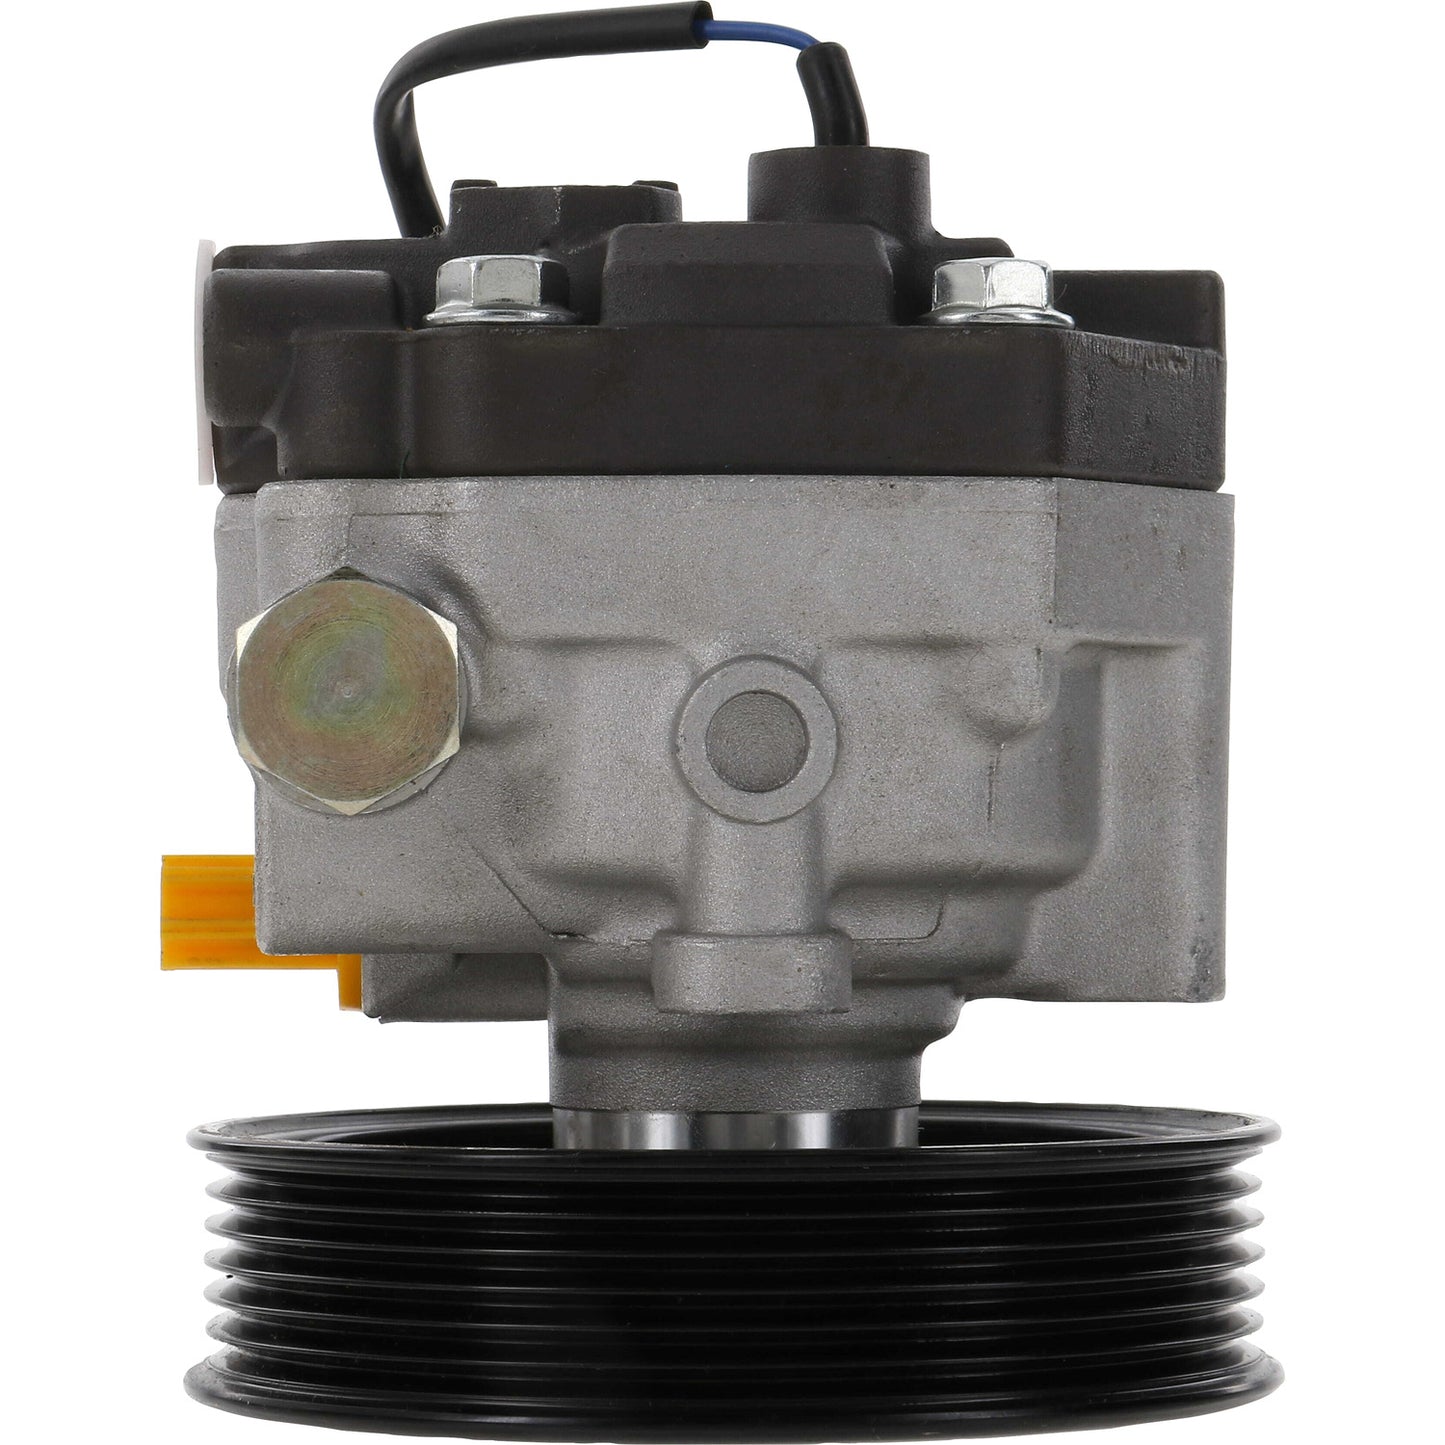 Power Steering Pump - Marathon HP - Hydraulic Power - New - 96475MN